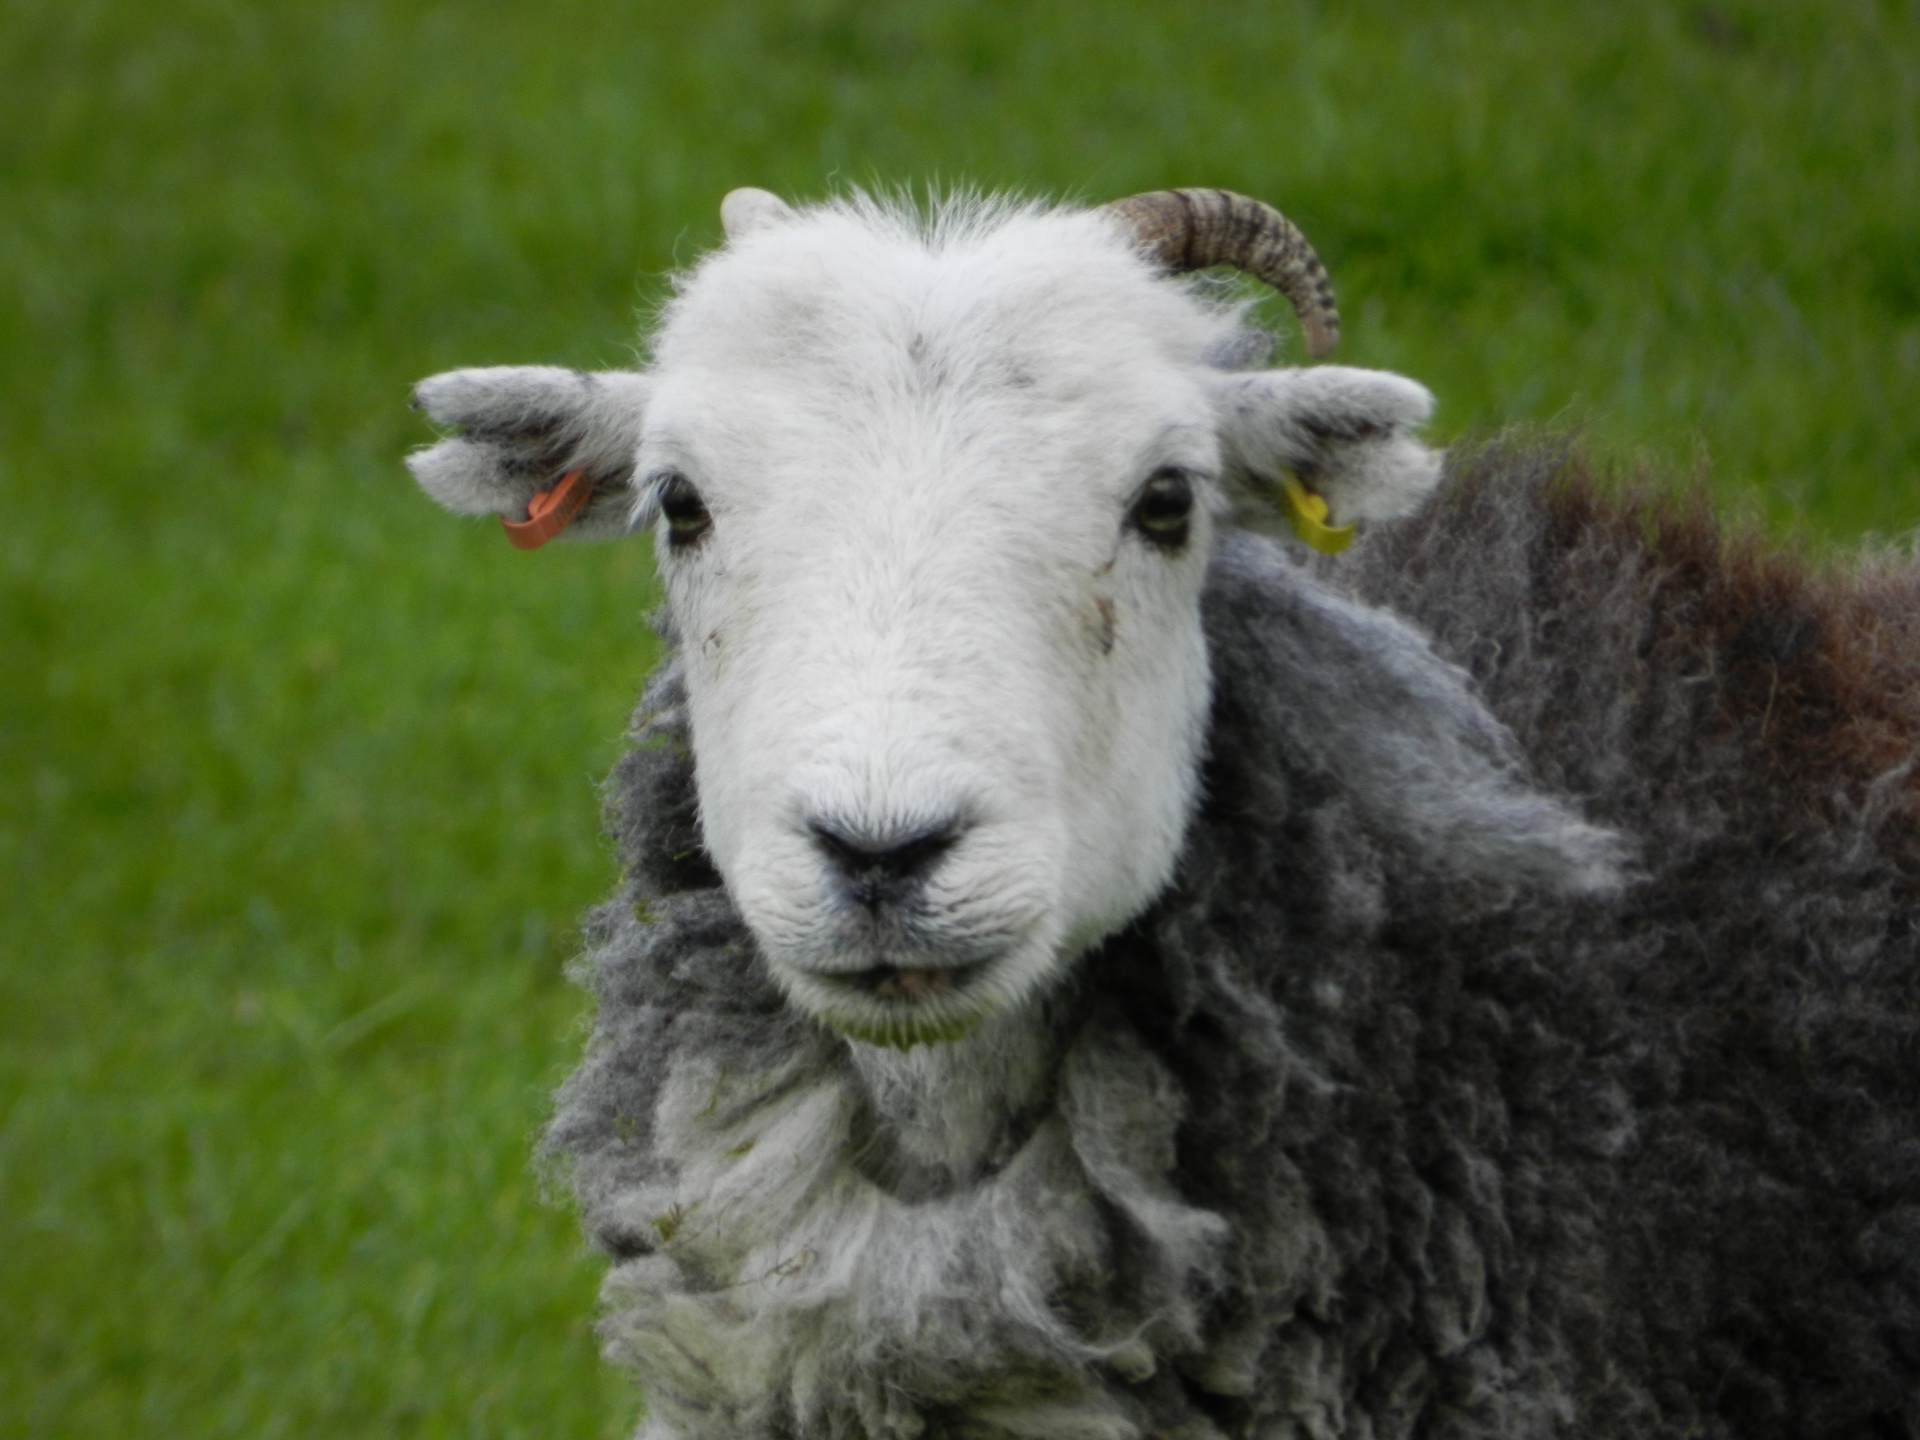 Close up of sheep's head